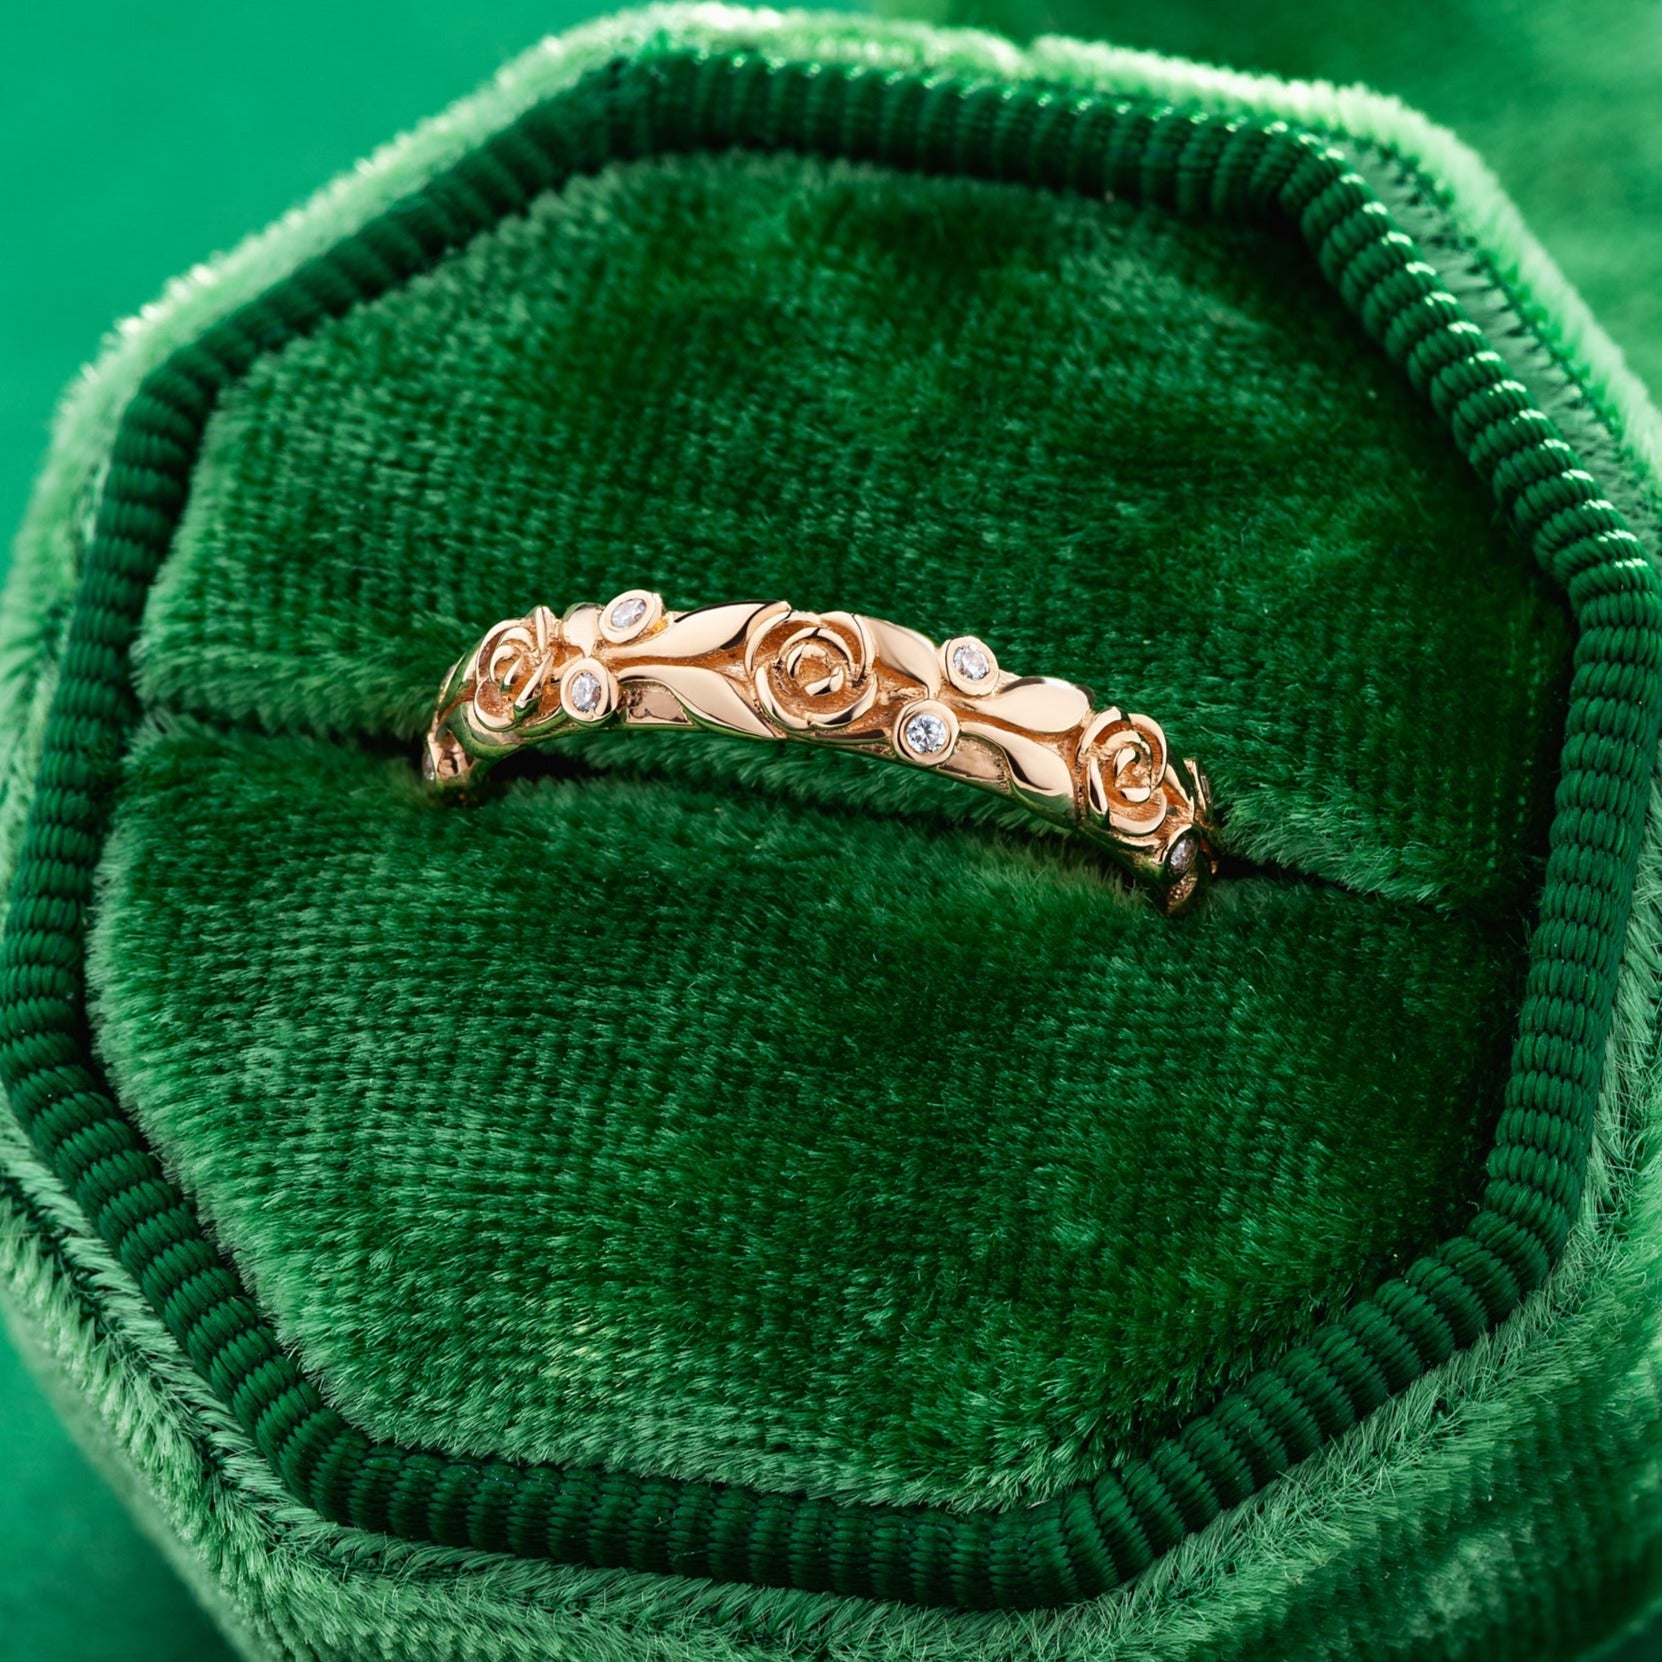 Dainity ring with flowers - escorialjewelry